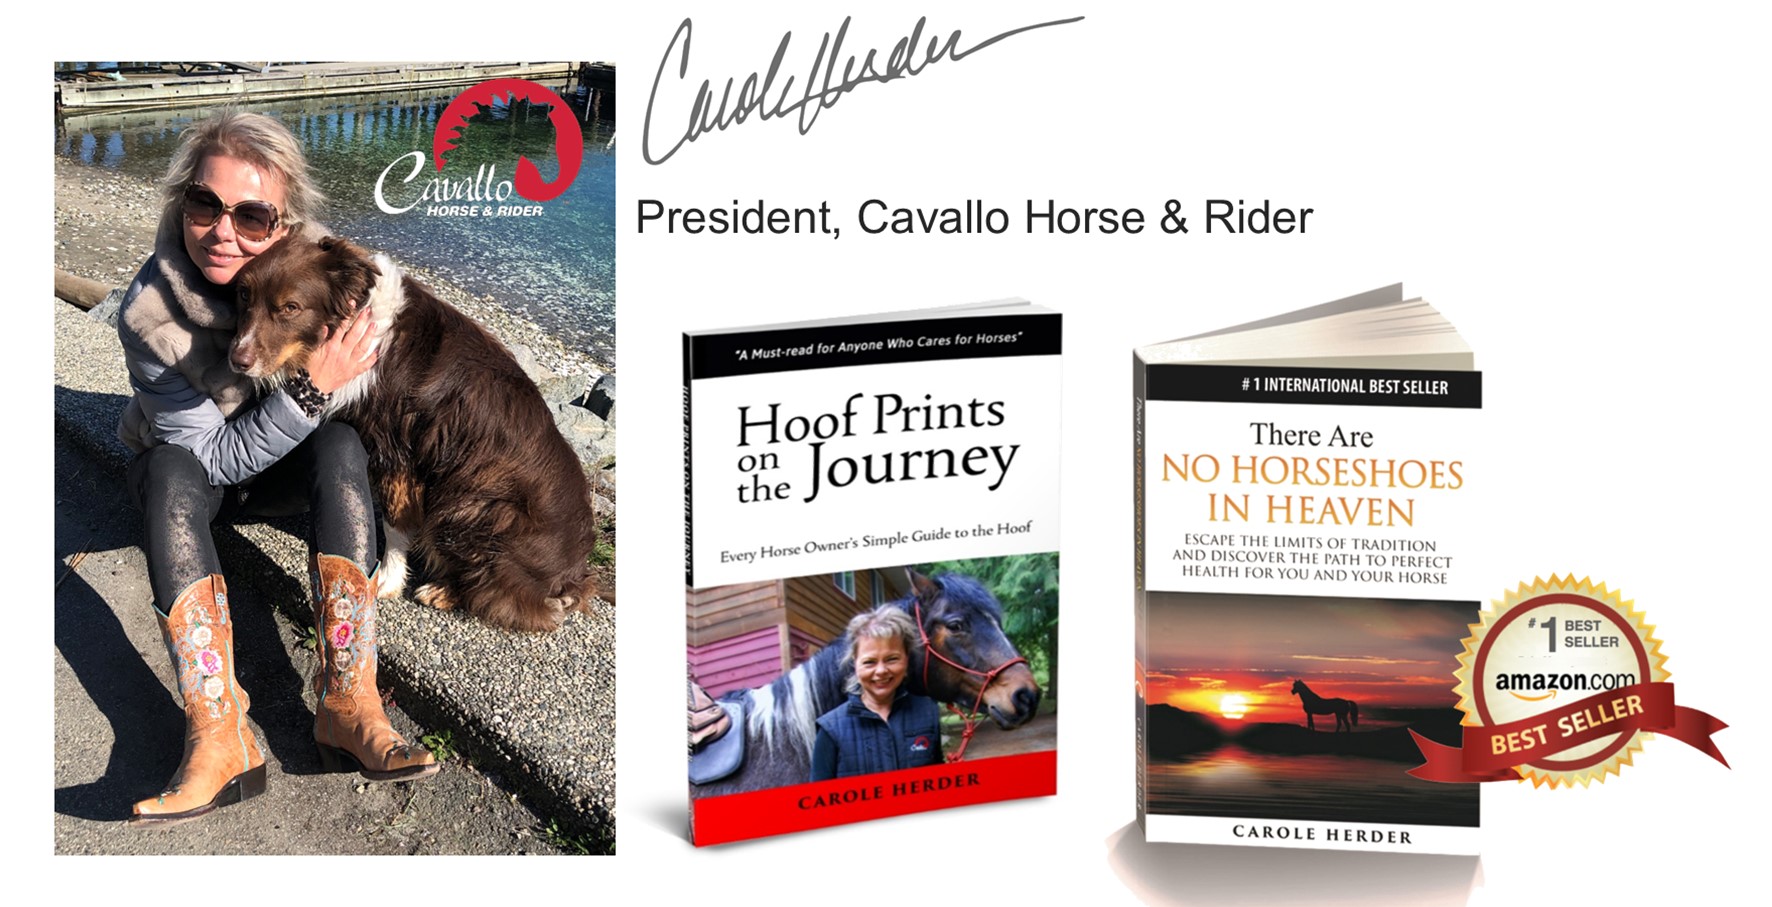 Cavallo President Carole Herder's signature